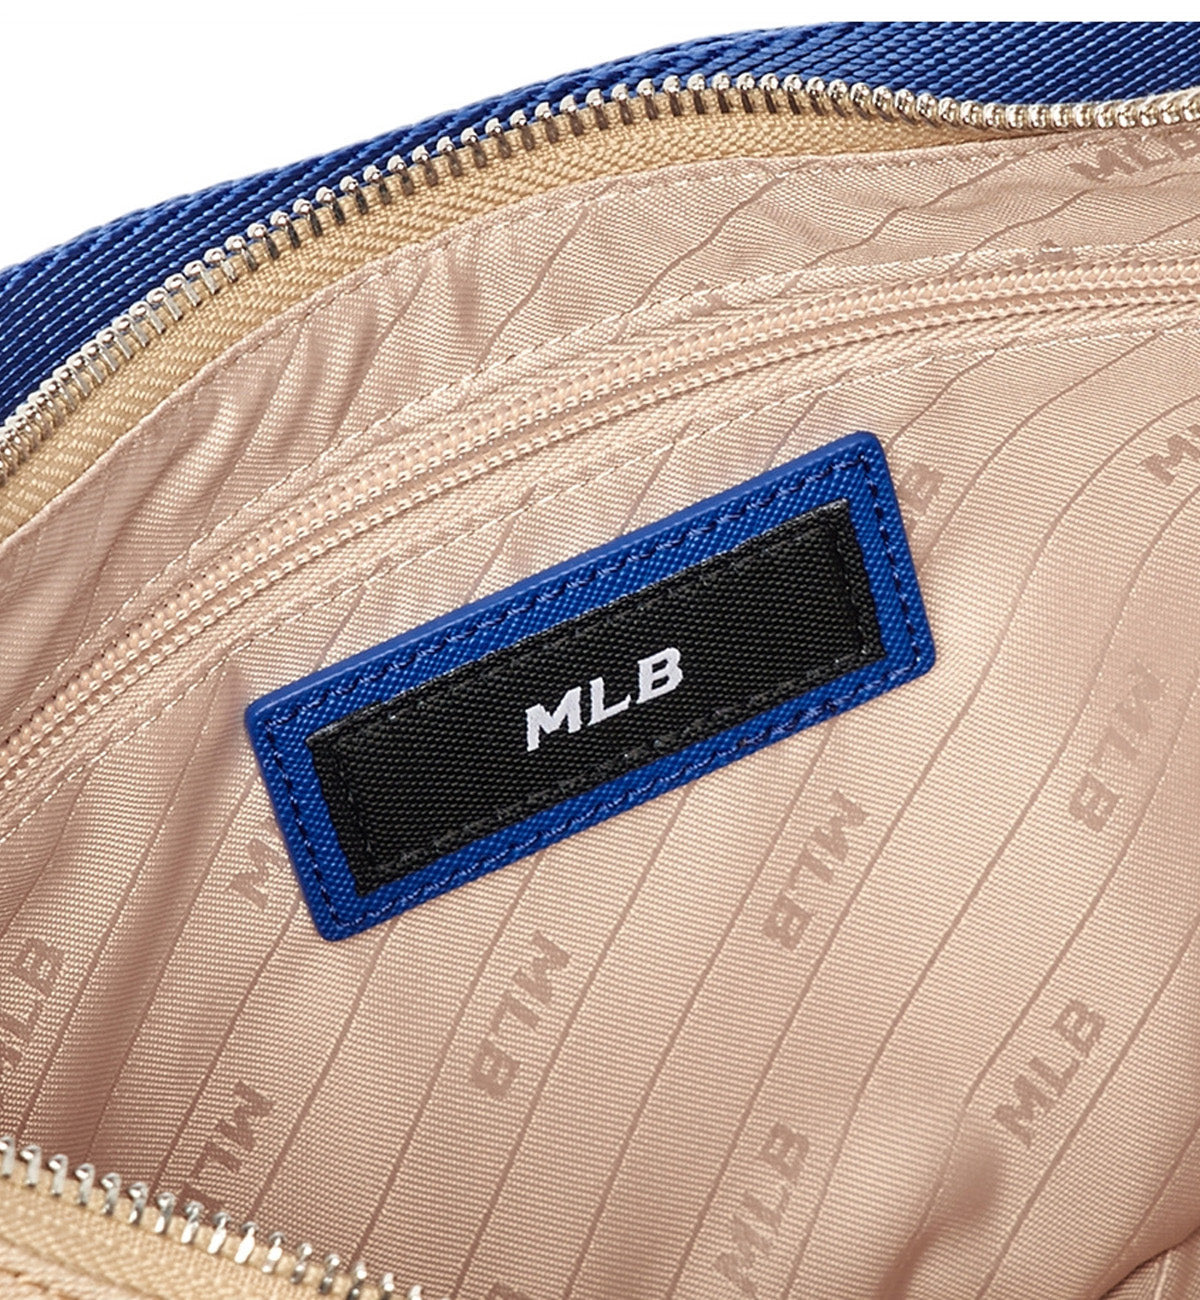 MLB Big Classic Monogram Jacquard L-Hobo Bag (Beige Blue)